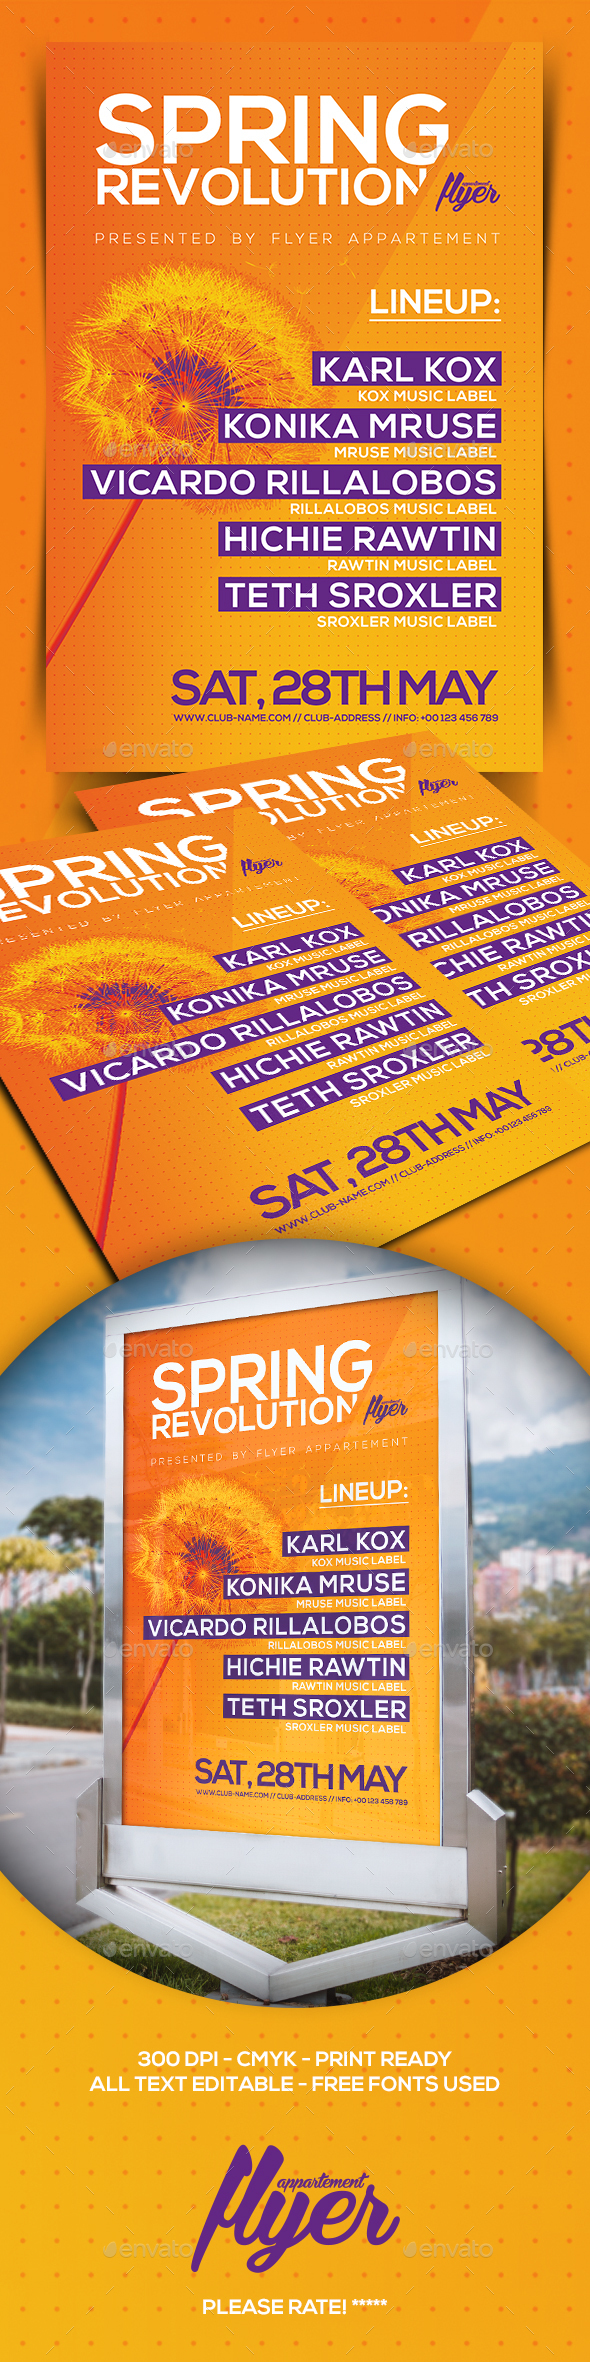 Spring Revolution Flyer